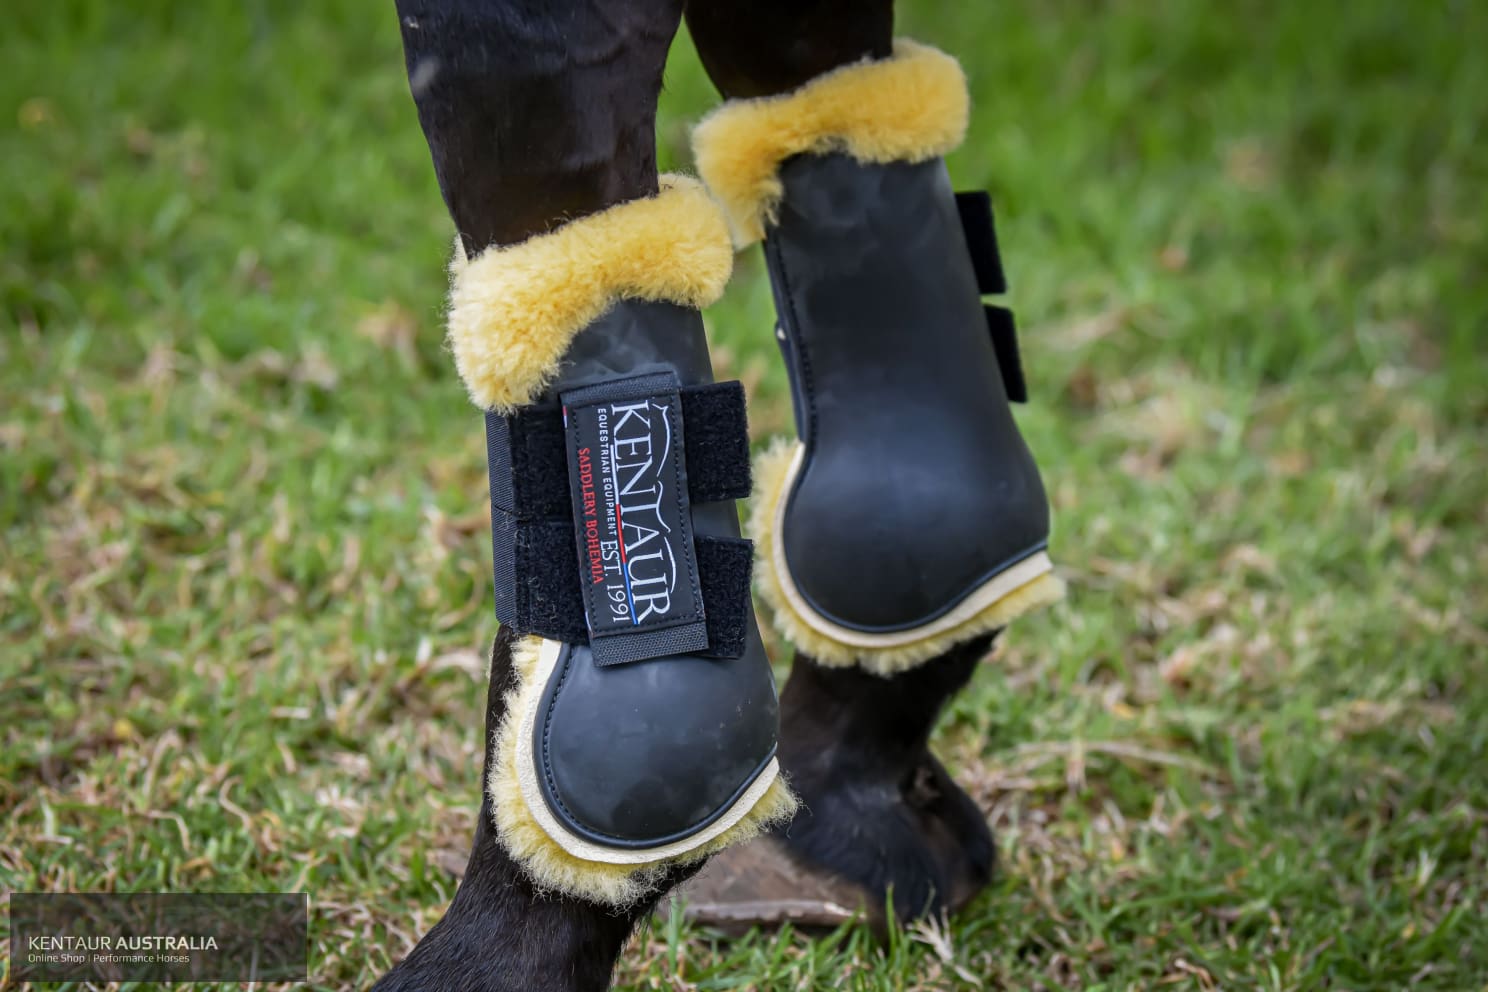 Kentaur ‘Profi’ Front Jumping Boots with Sheepskin Jumping Boots